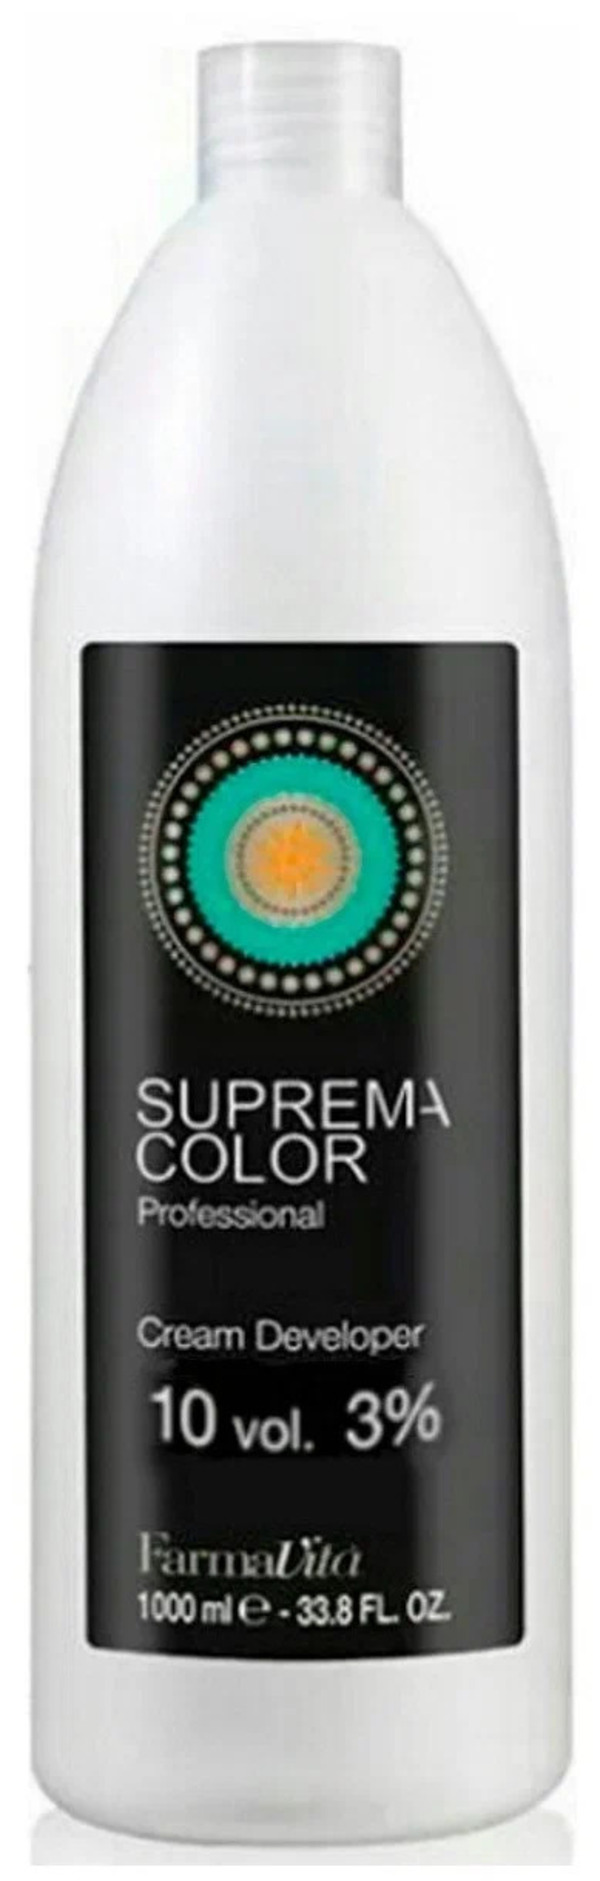 Крем-окислитель FarmaVita Suprema Color 3%, 1000 мл